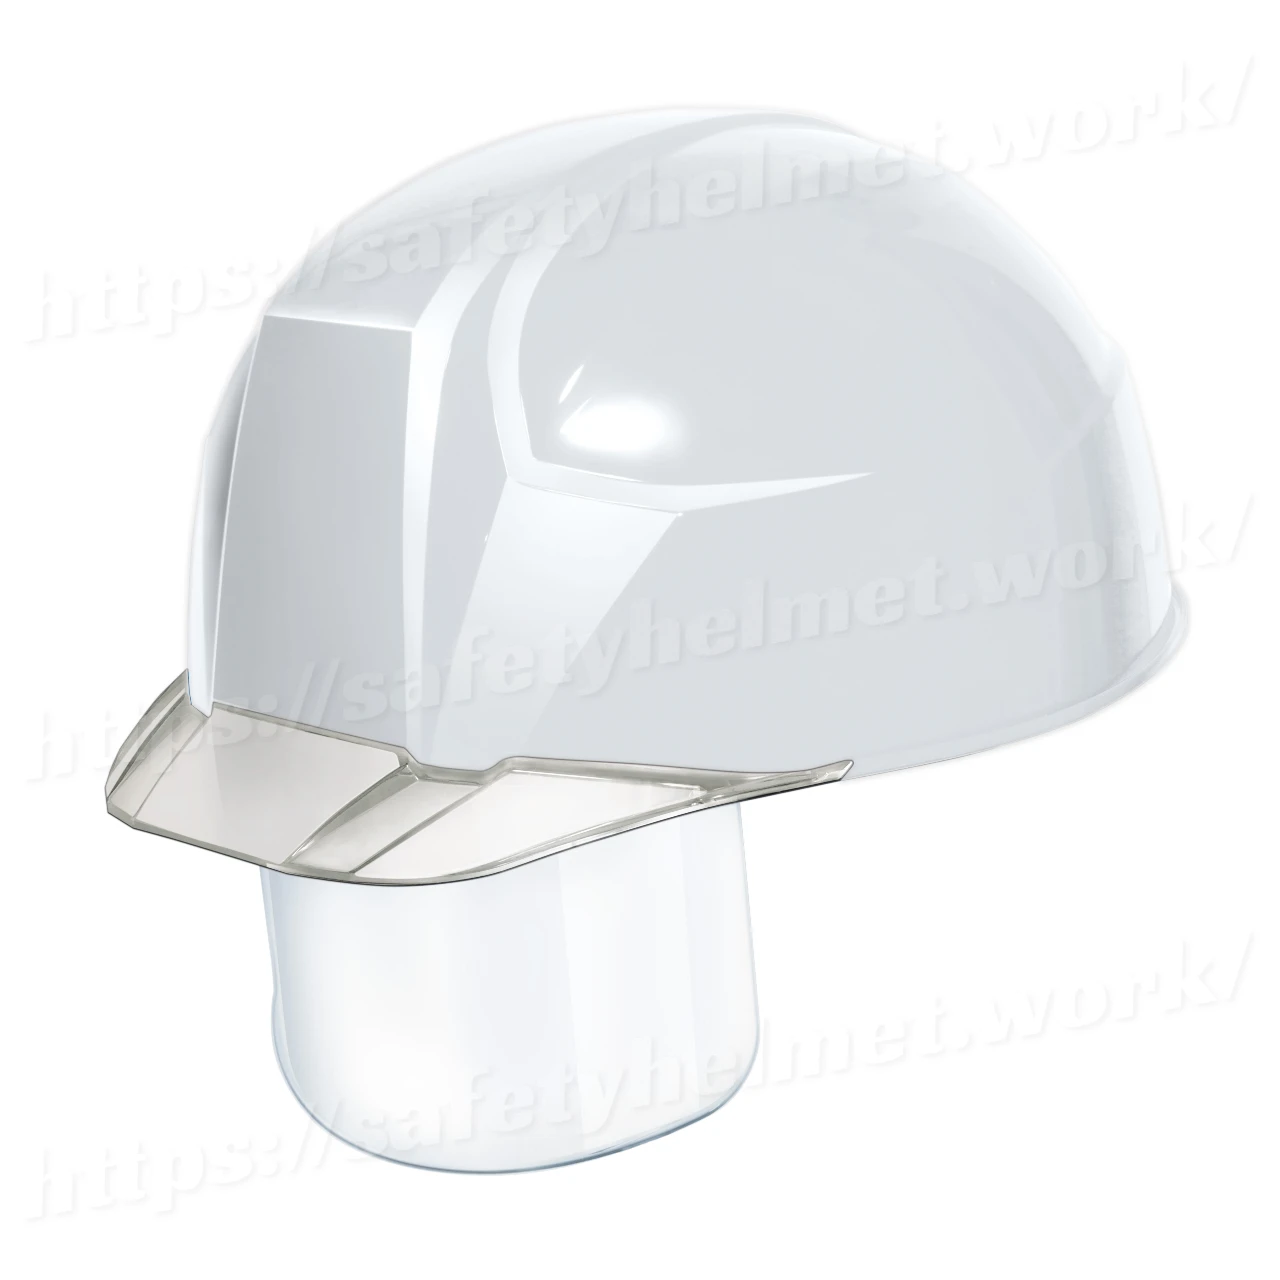 dic-helmet-lightest-shield-aa23cs-white-clear